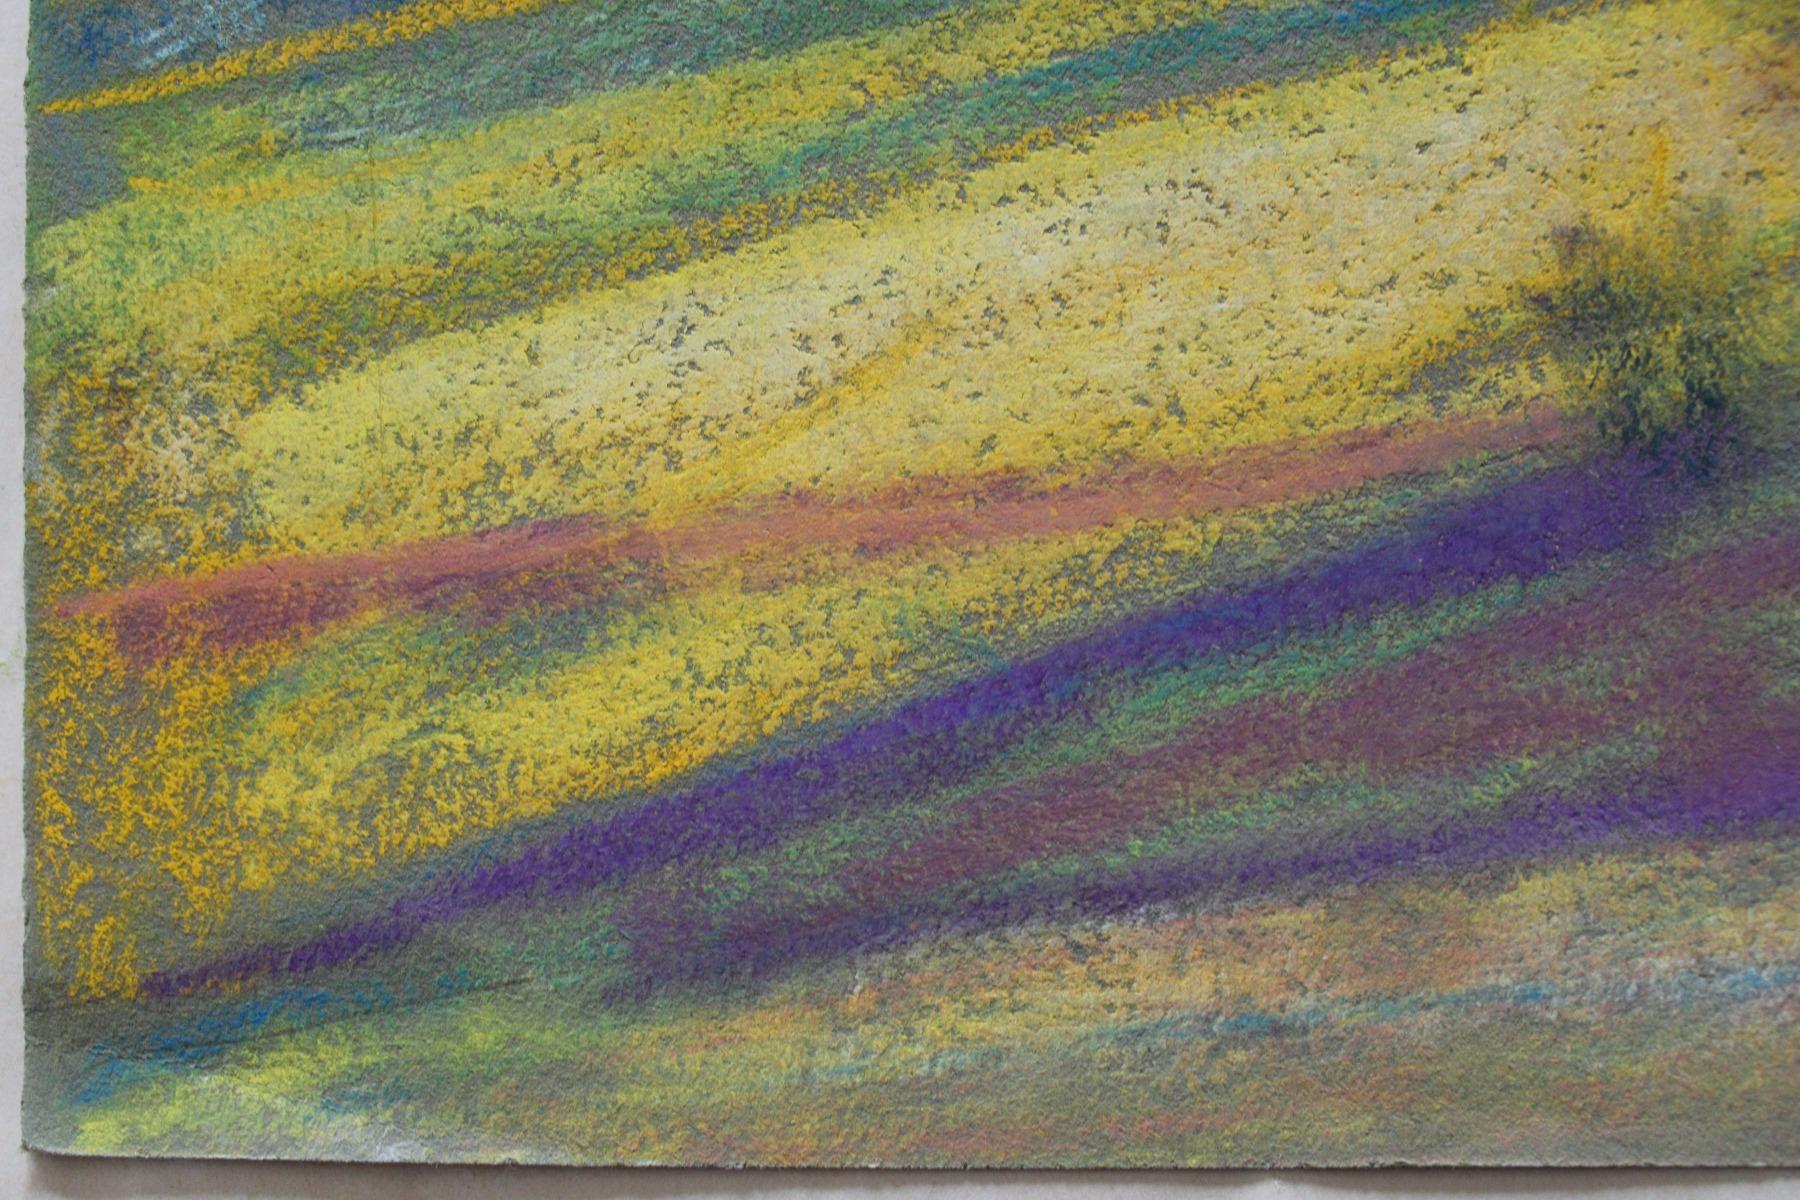 Autumn road. Paper, pastel, 25x33 cm

